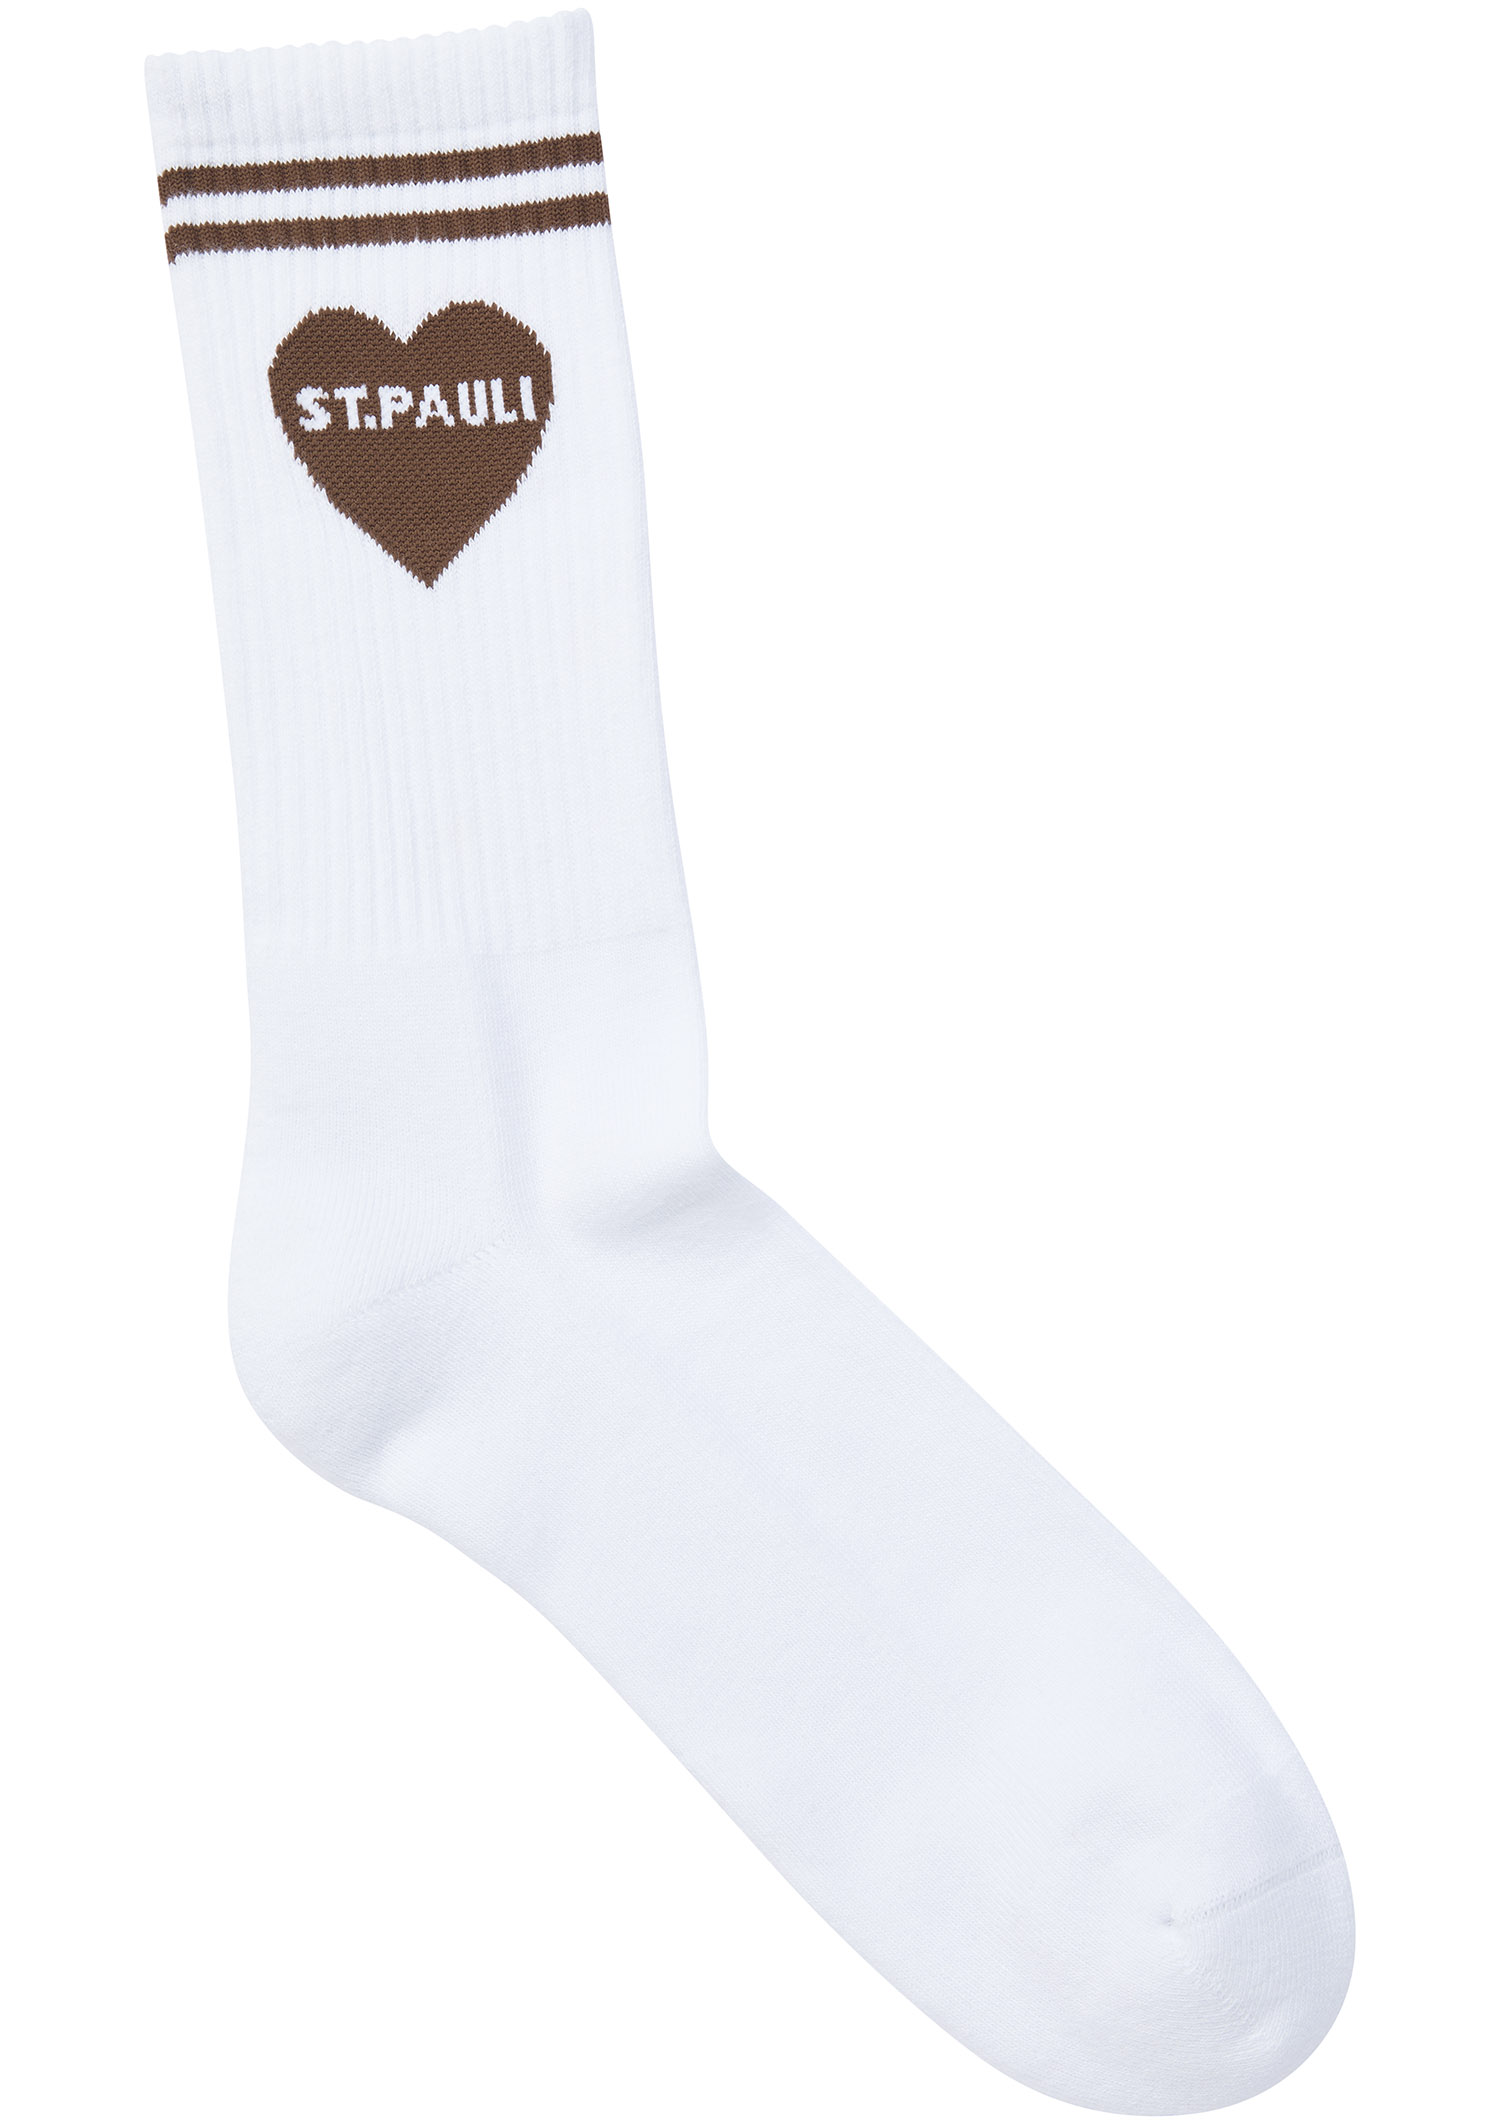 Socks "St. Pauli Heart" - brown